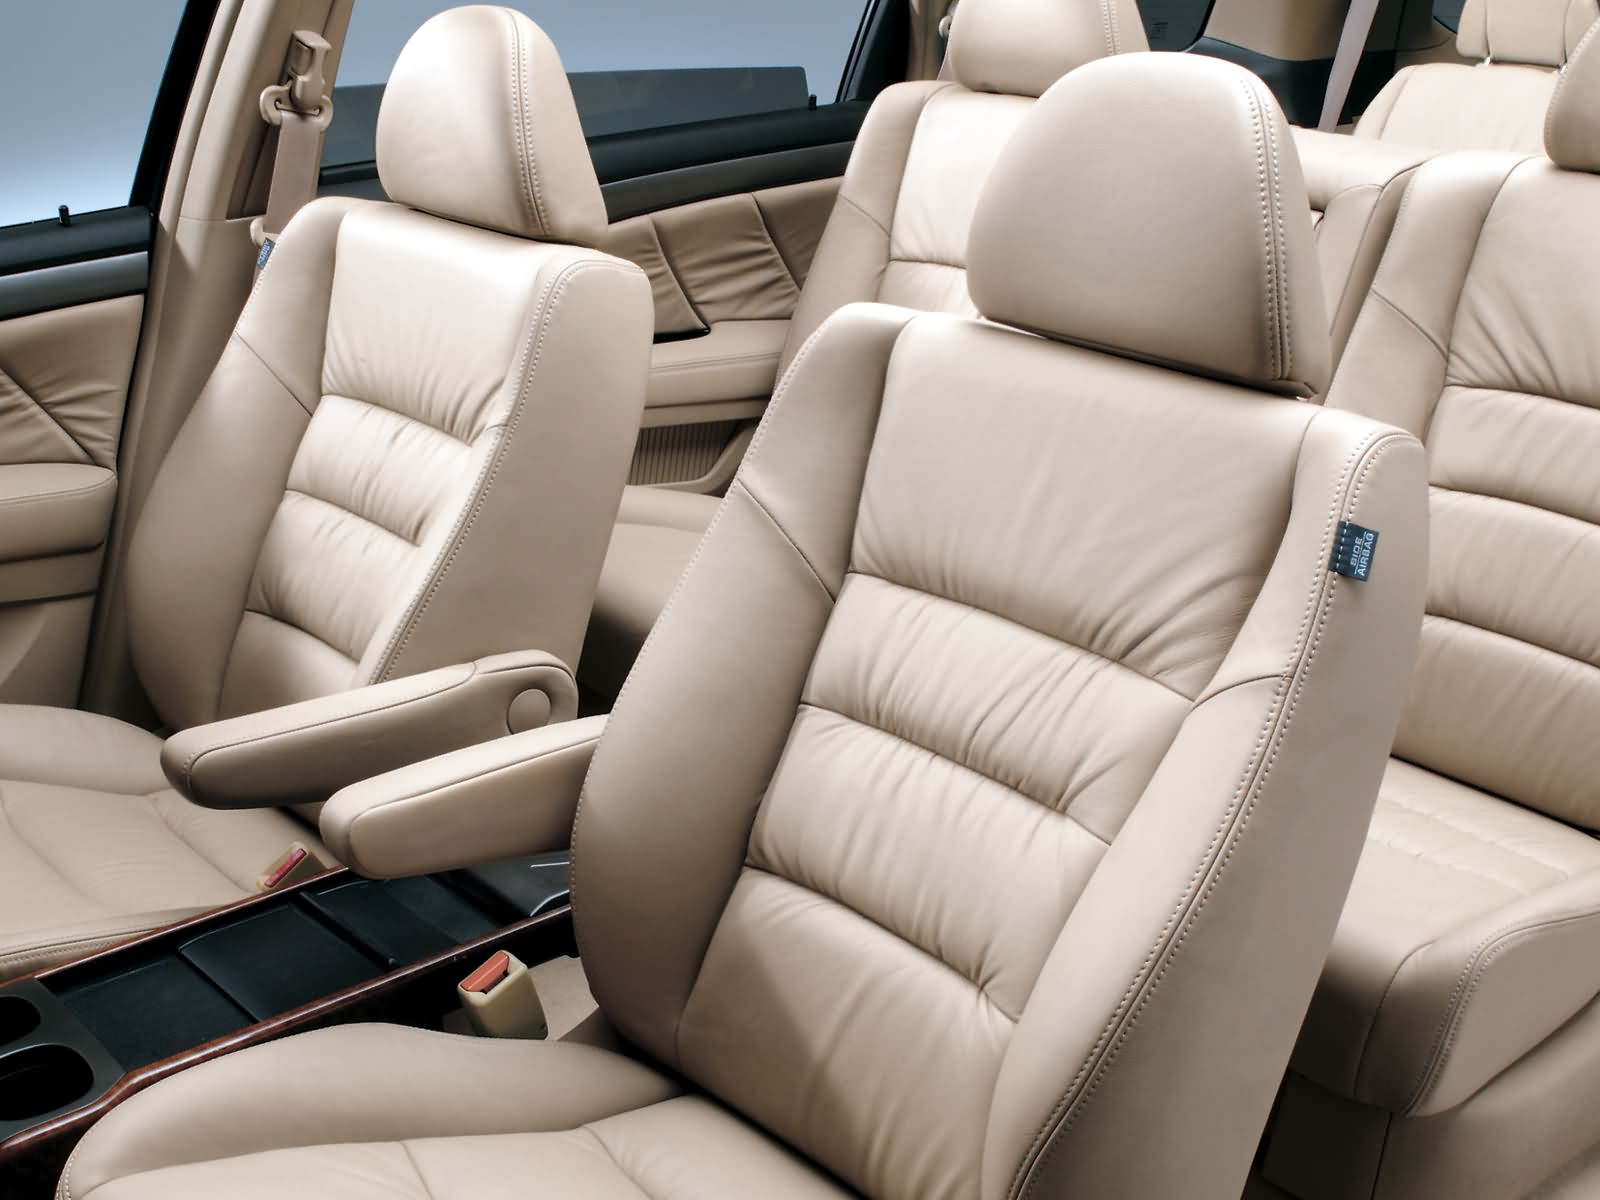 Leather Interior, leather seats, car seats.